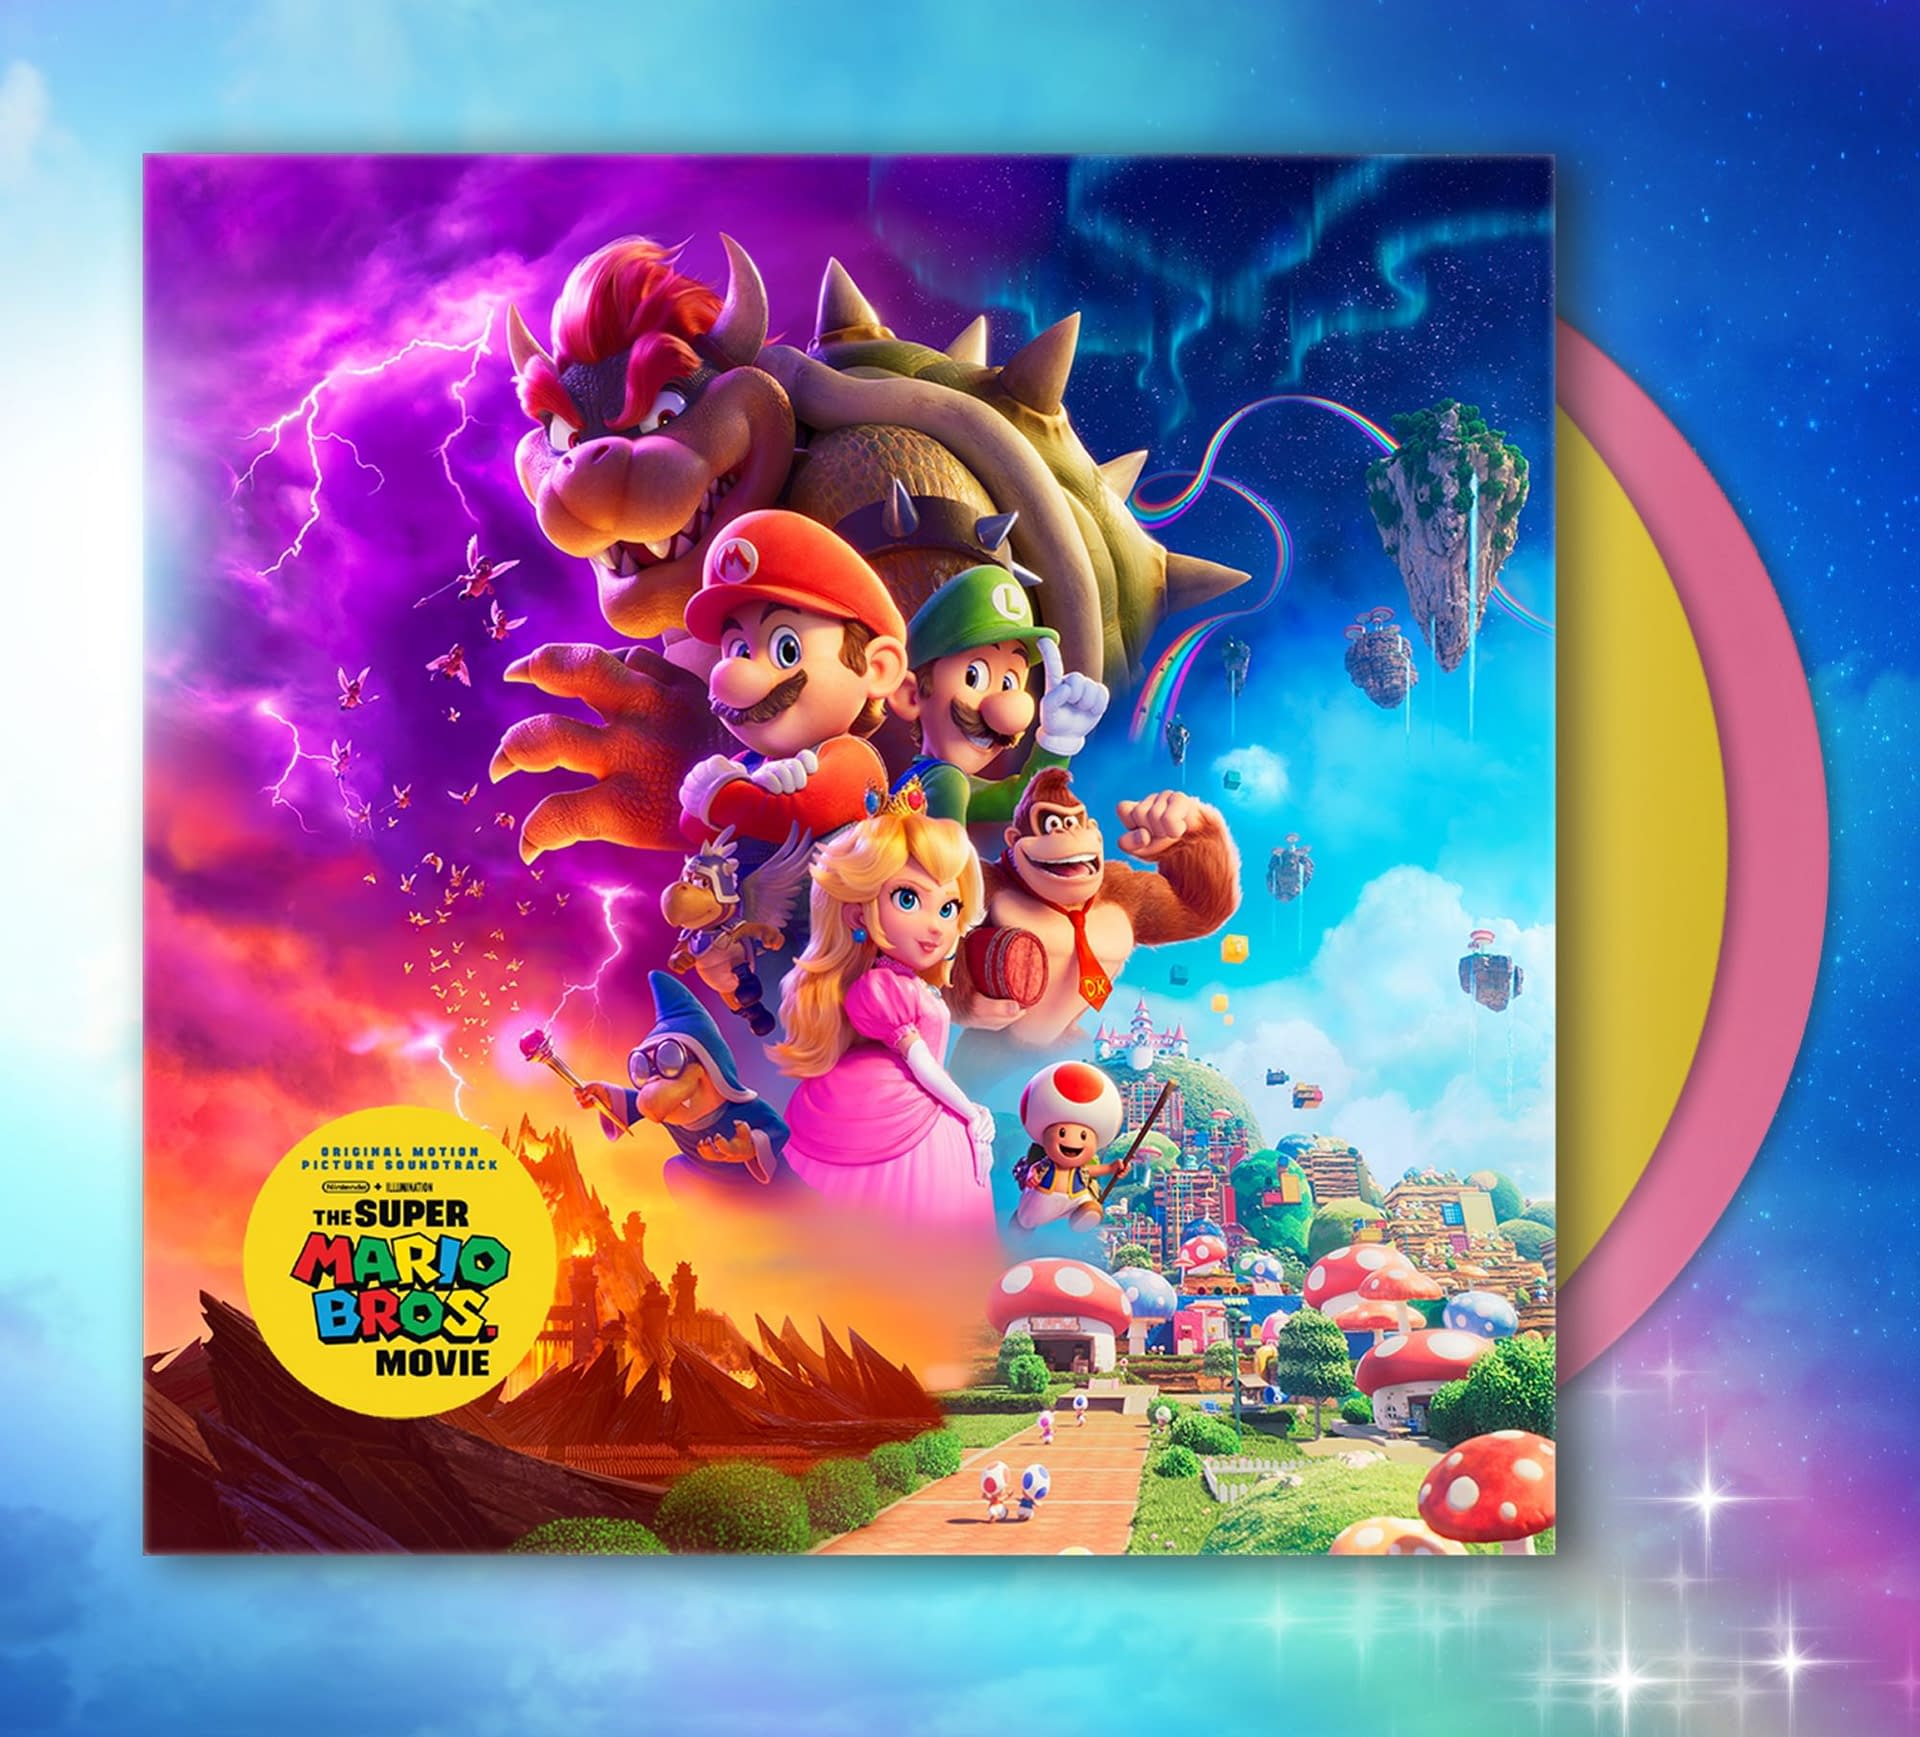 The Super Mario Bros. (Peaches) [Remix] - Single — álbum de F4ST — Apple  Music